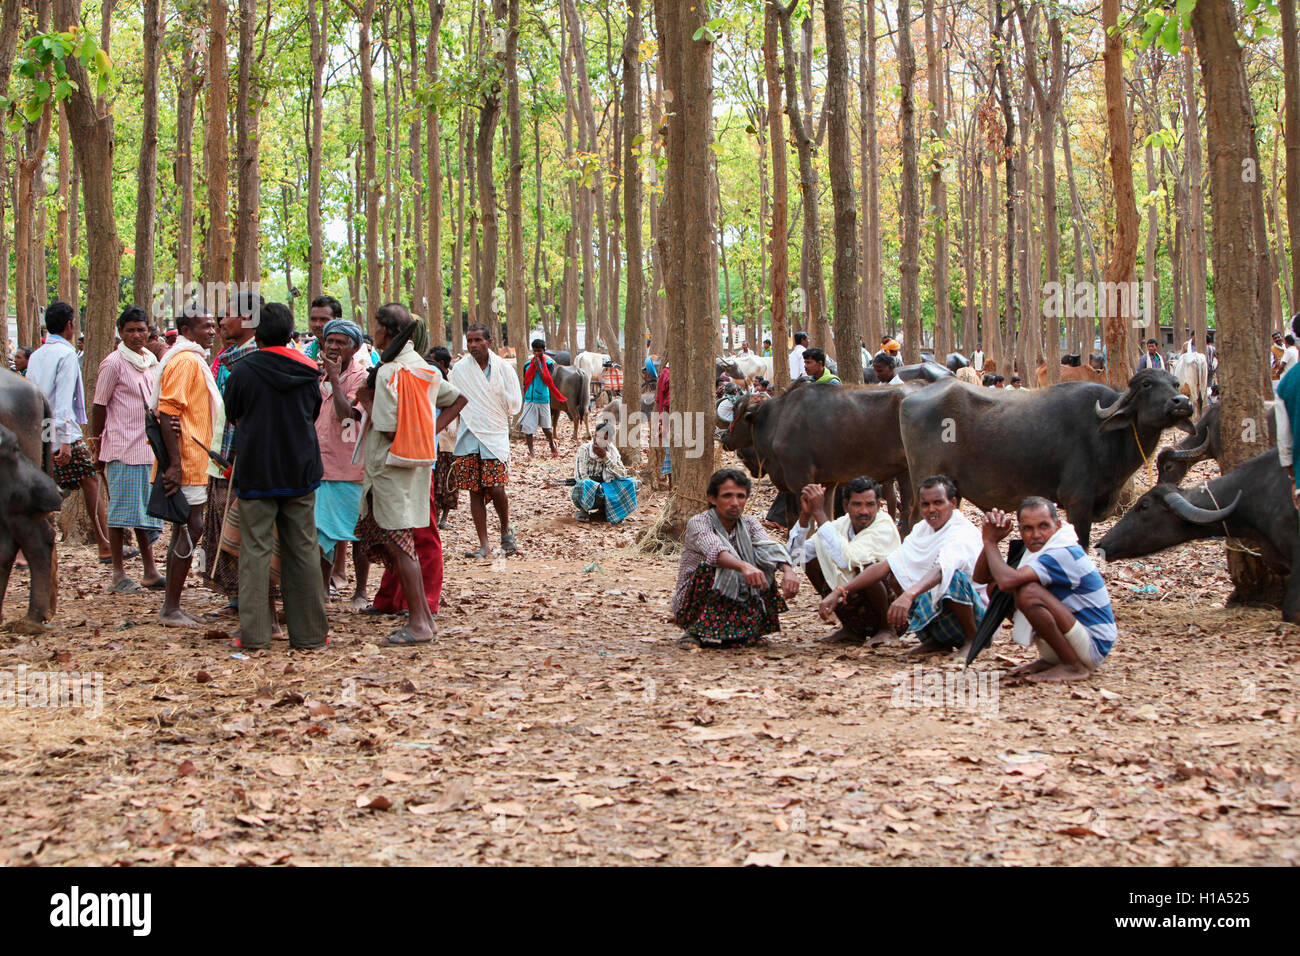 Cattle for sell, Dhurwa Tribal Market, Pandripani Village, Chattisgadh, India Stock Photo